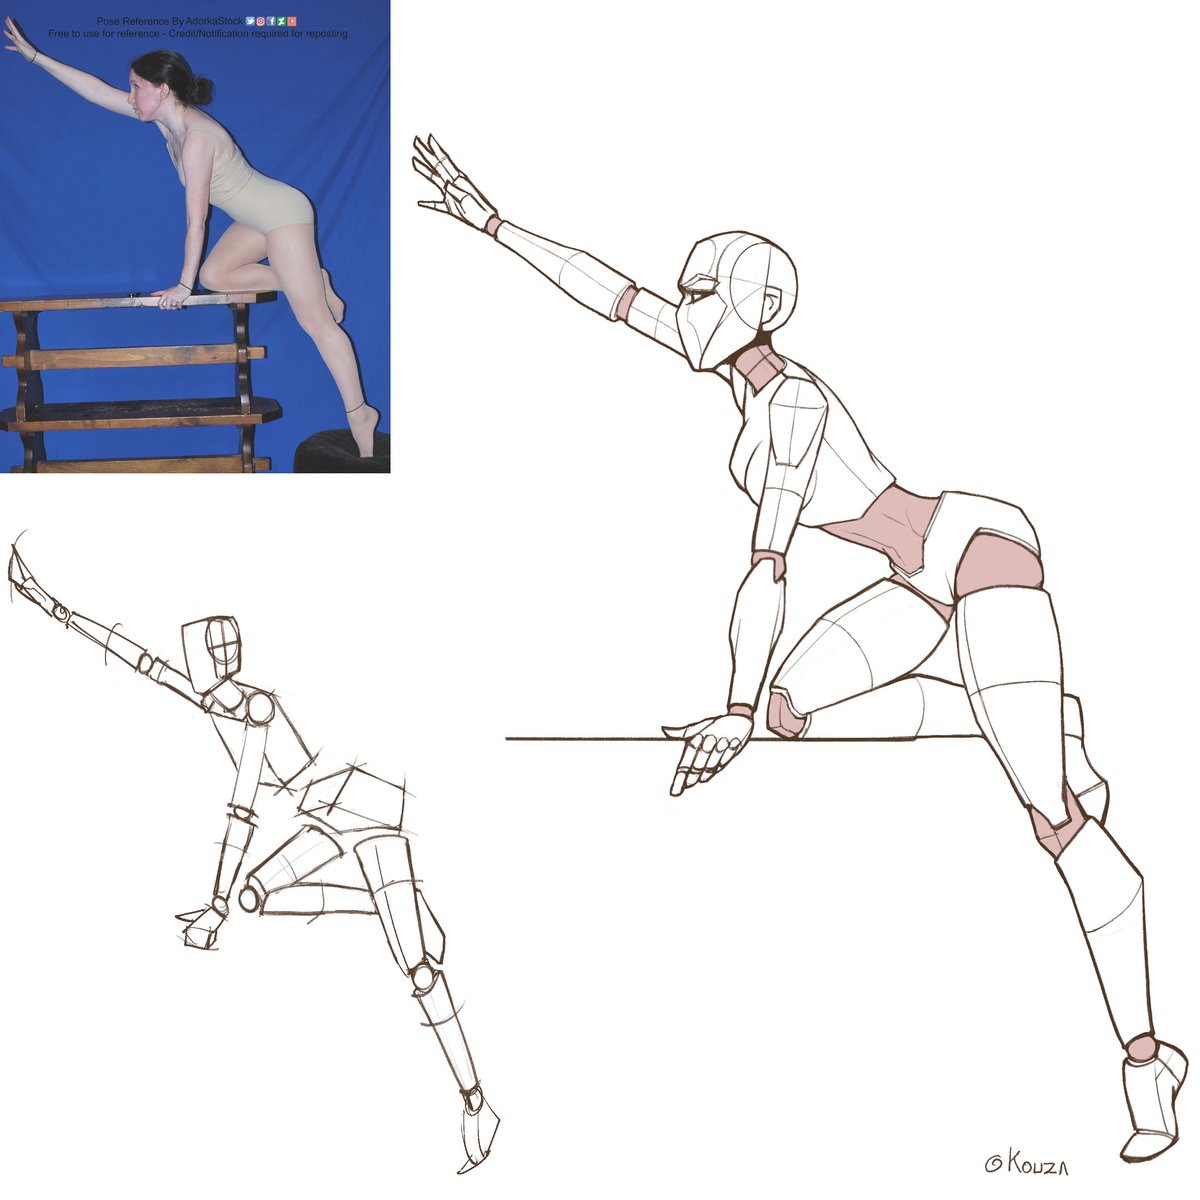 Pose study in 'dummy' way, for practice block out.  
instagram.com/kouzanagi/

@adorkastock
for nice pose ref.
 #comics #art #manga #drawing #sketch #anime #digitalart #digitalpainting #cute #lineart #arttutorial #arttipsandtricks #howtodraw #poses